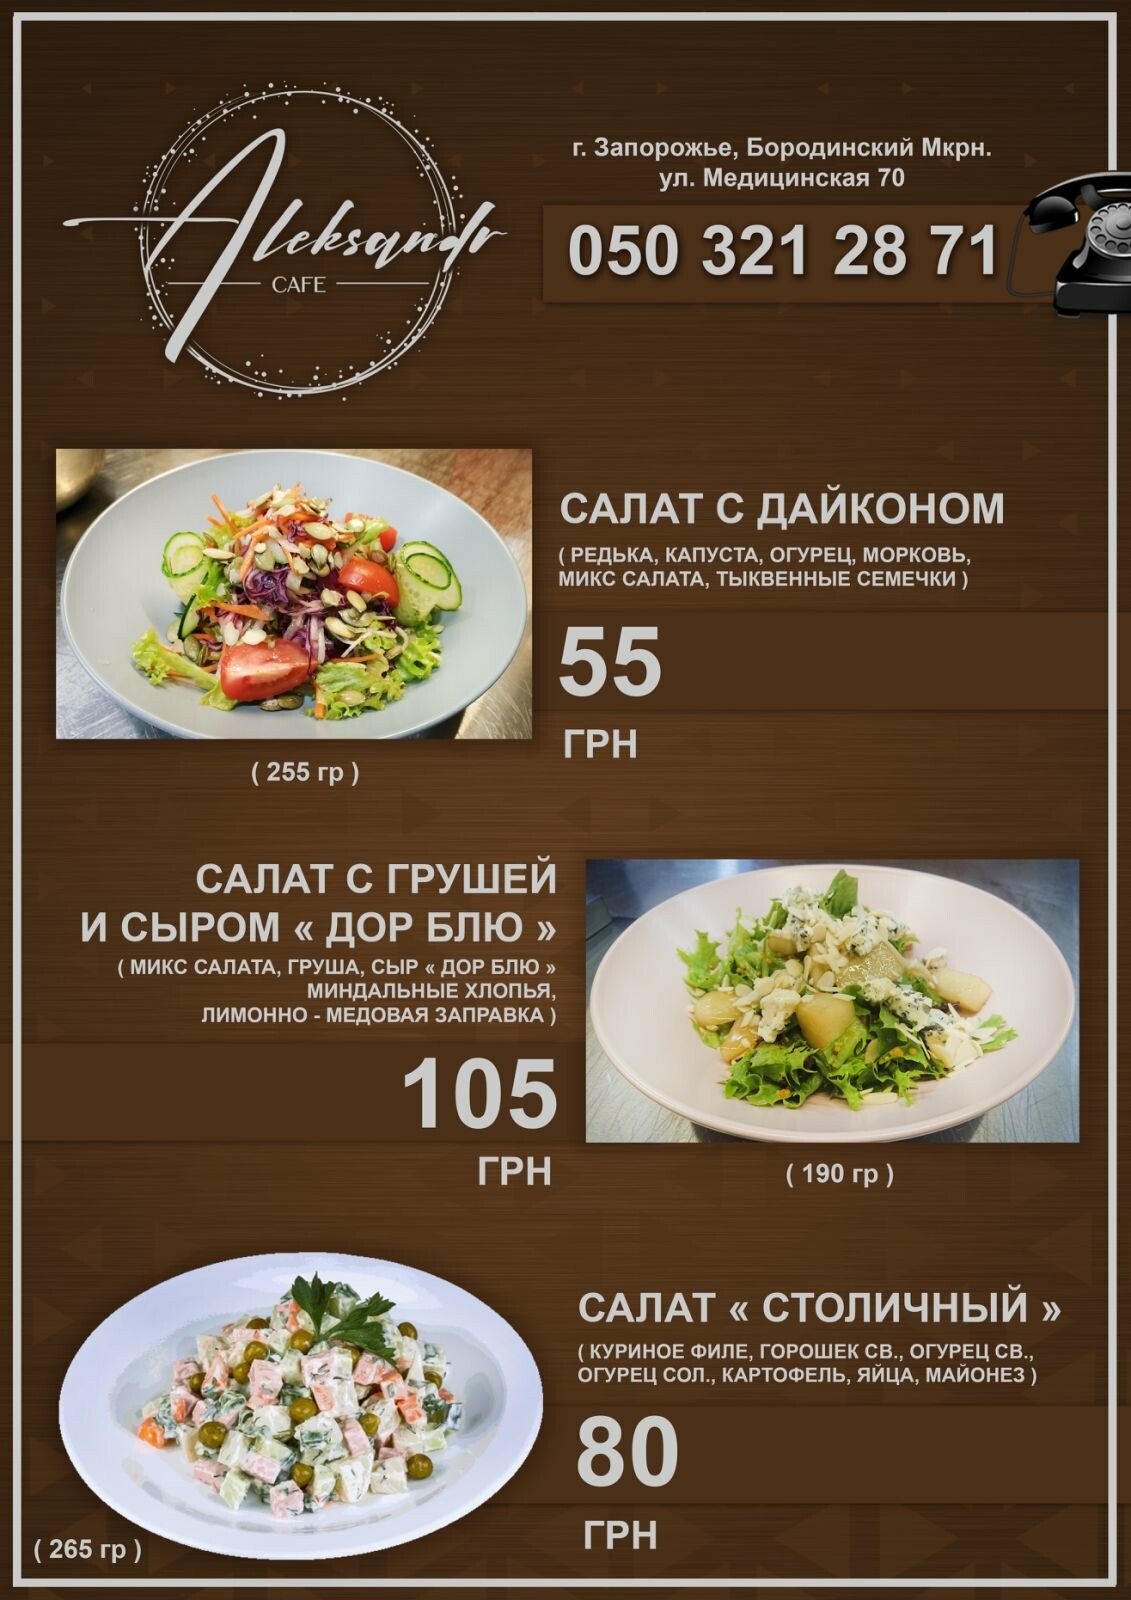 Доставка еды в Запорожье кафе Александр, фото-3